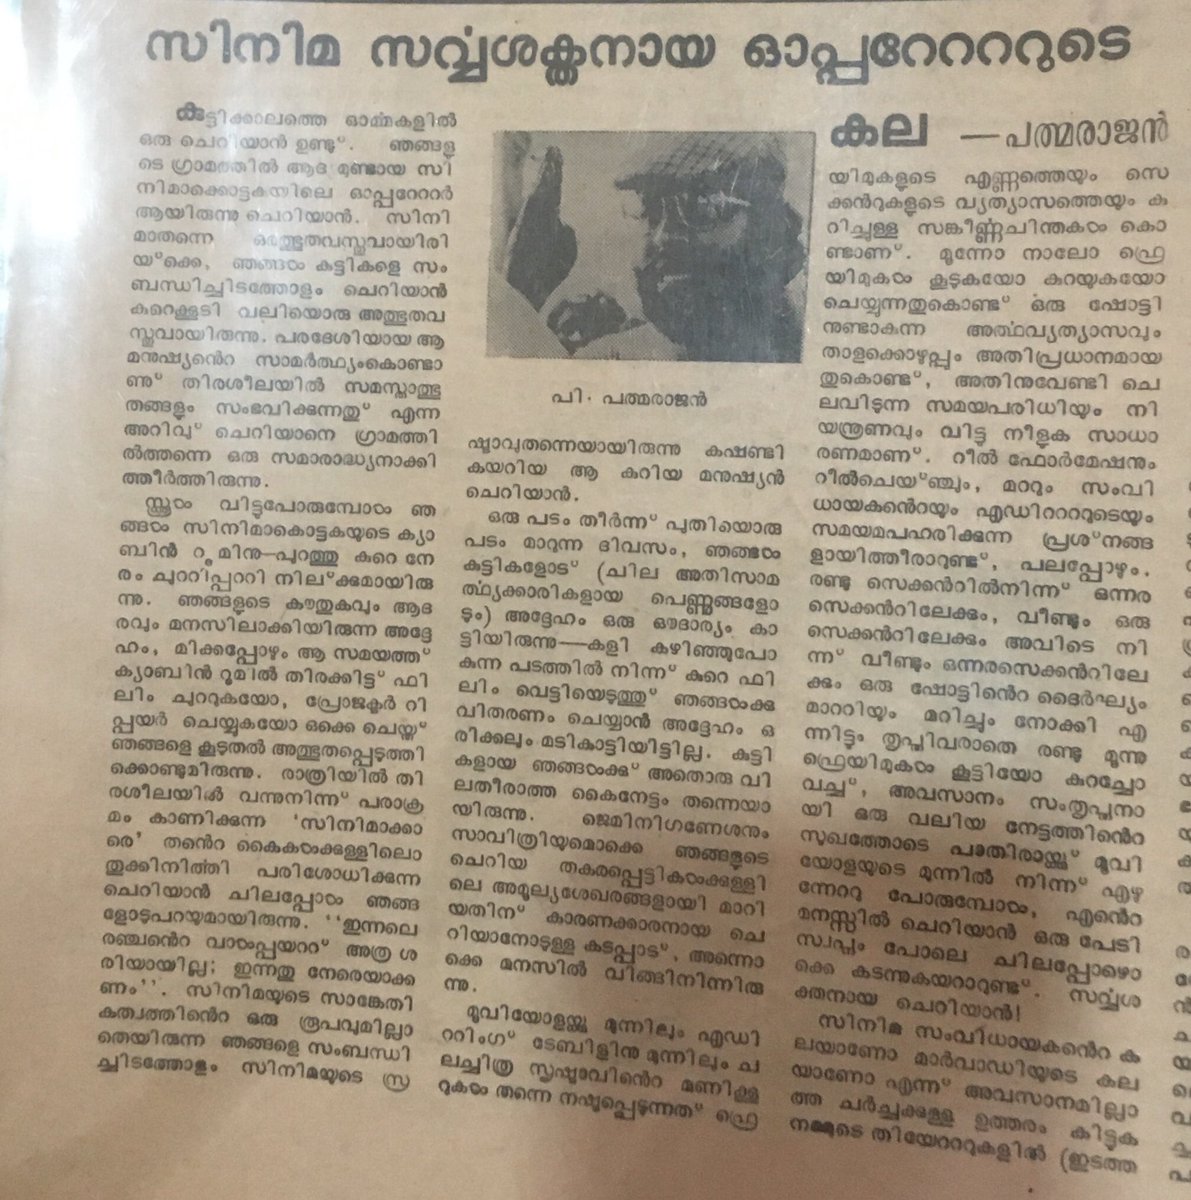 P. Padmarajan. Times just after Peruvazhiyambalam perhaps...